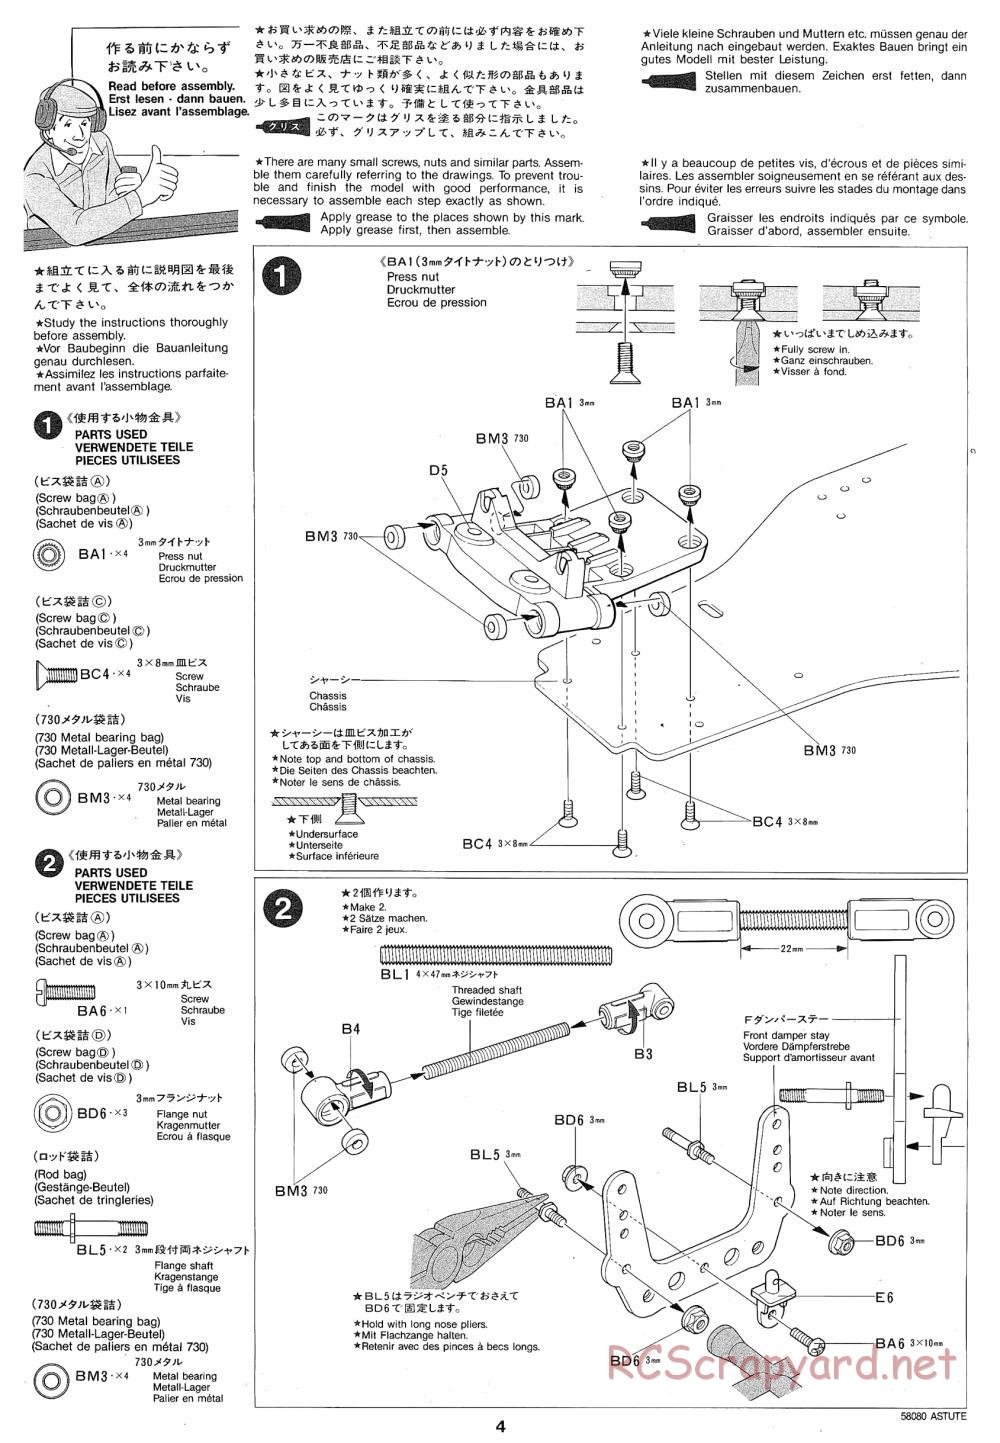 Tamiya - Astute - 58080 - Manual - Page 4